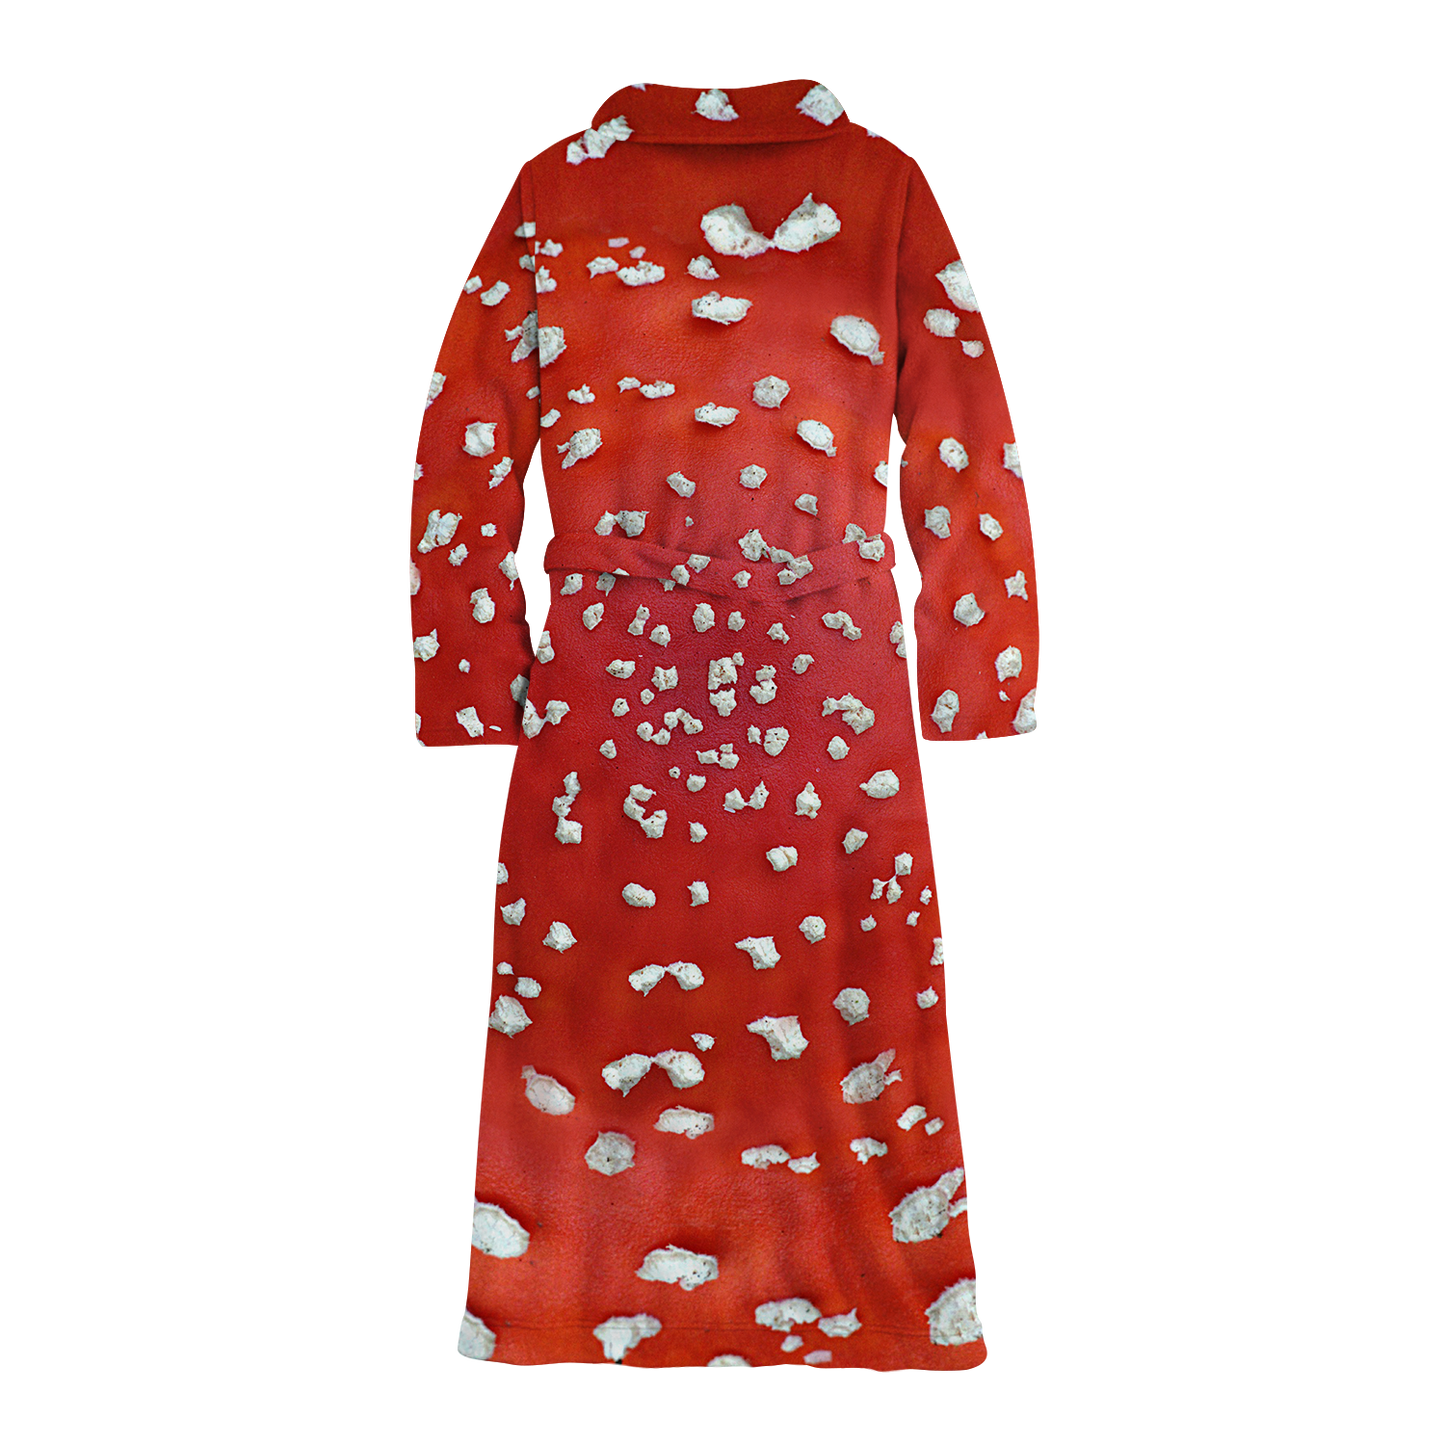 Fly Agaric - Amanita All Over Print Fleece Robe